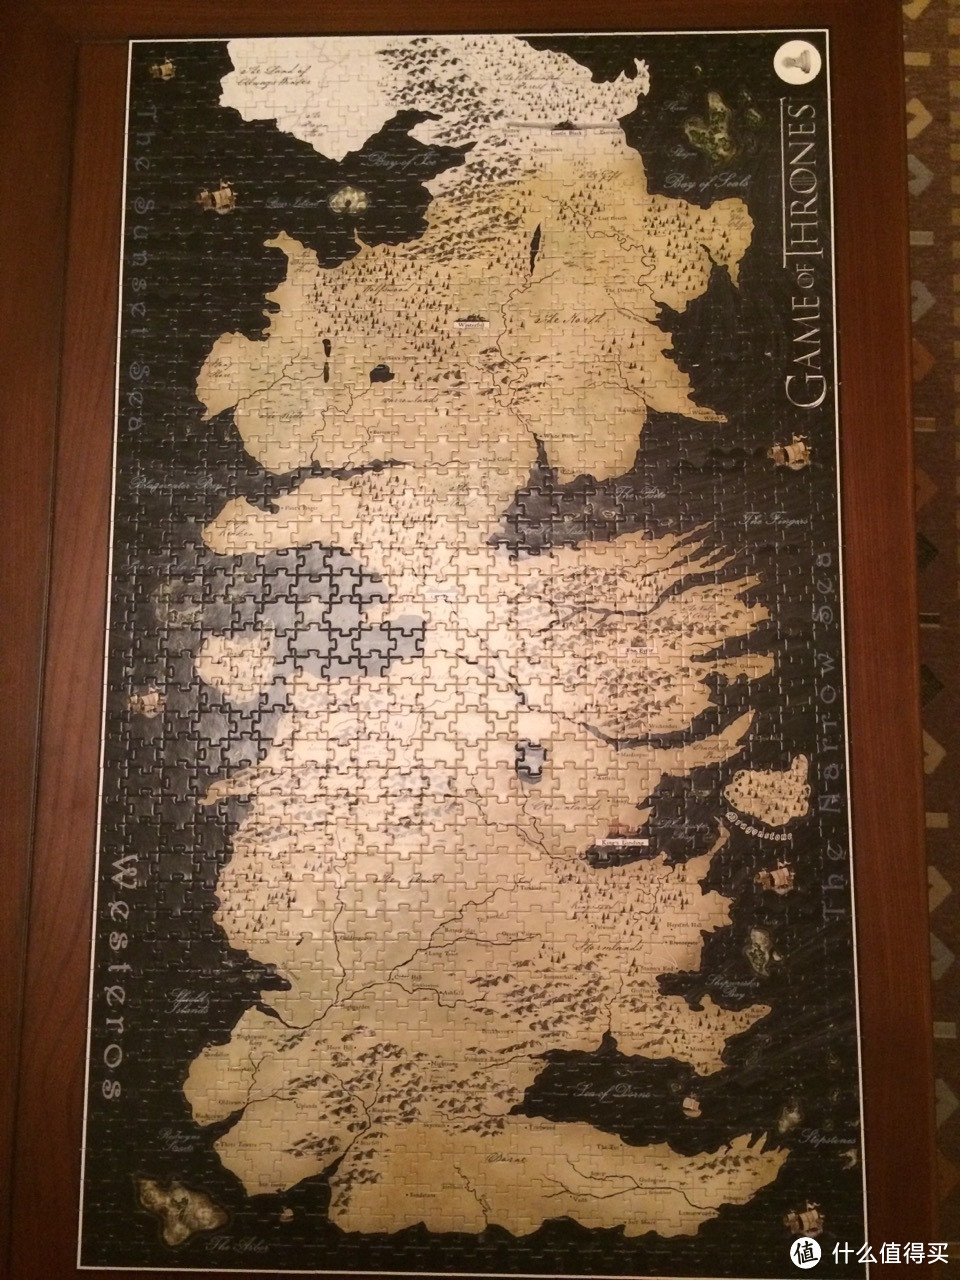 Game of Thrones：Westeros Puzzle 权力的游戏 维斯特洛大陆 立体多层拼图